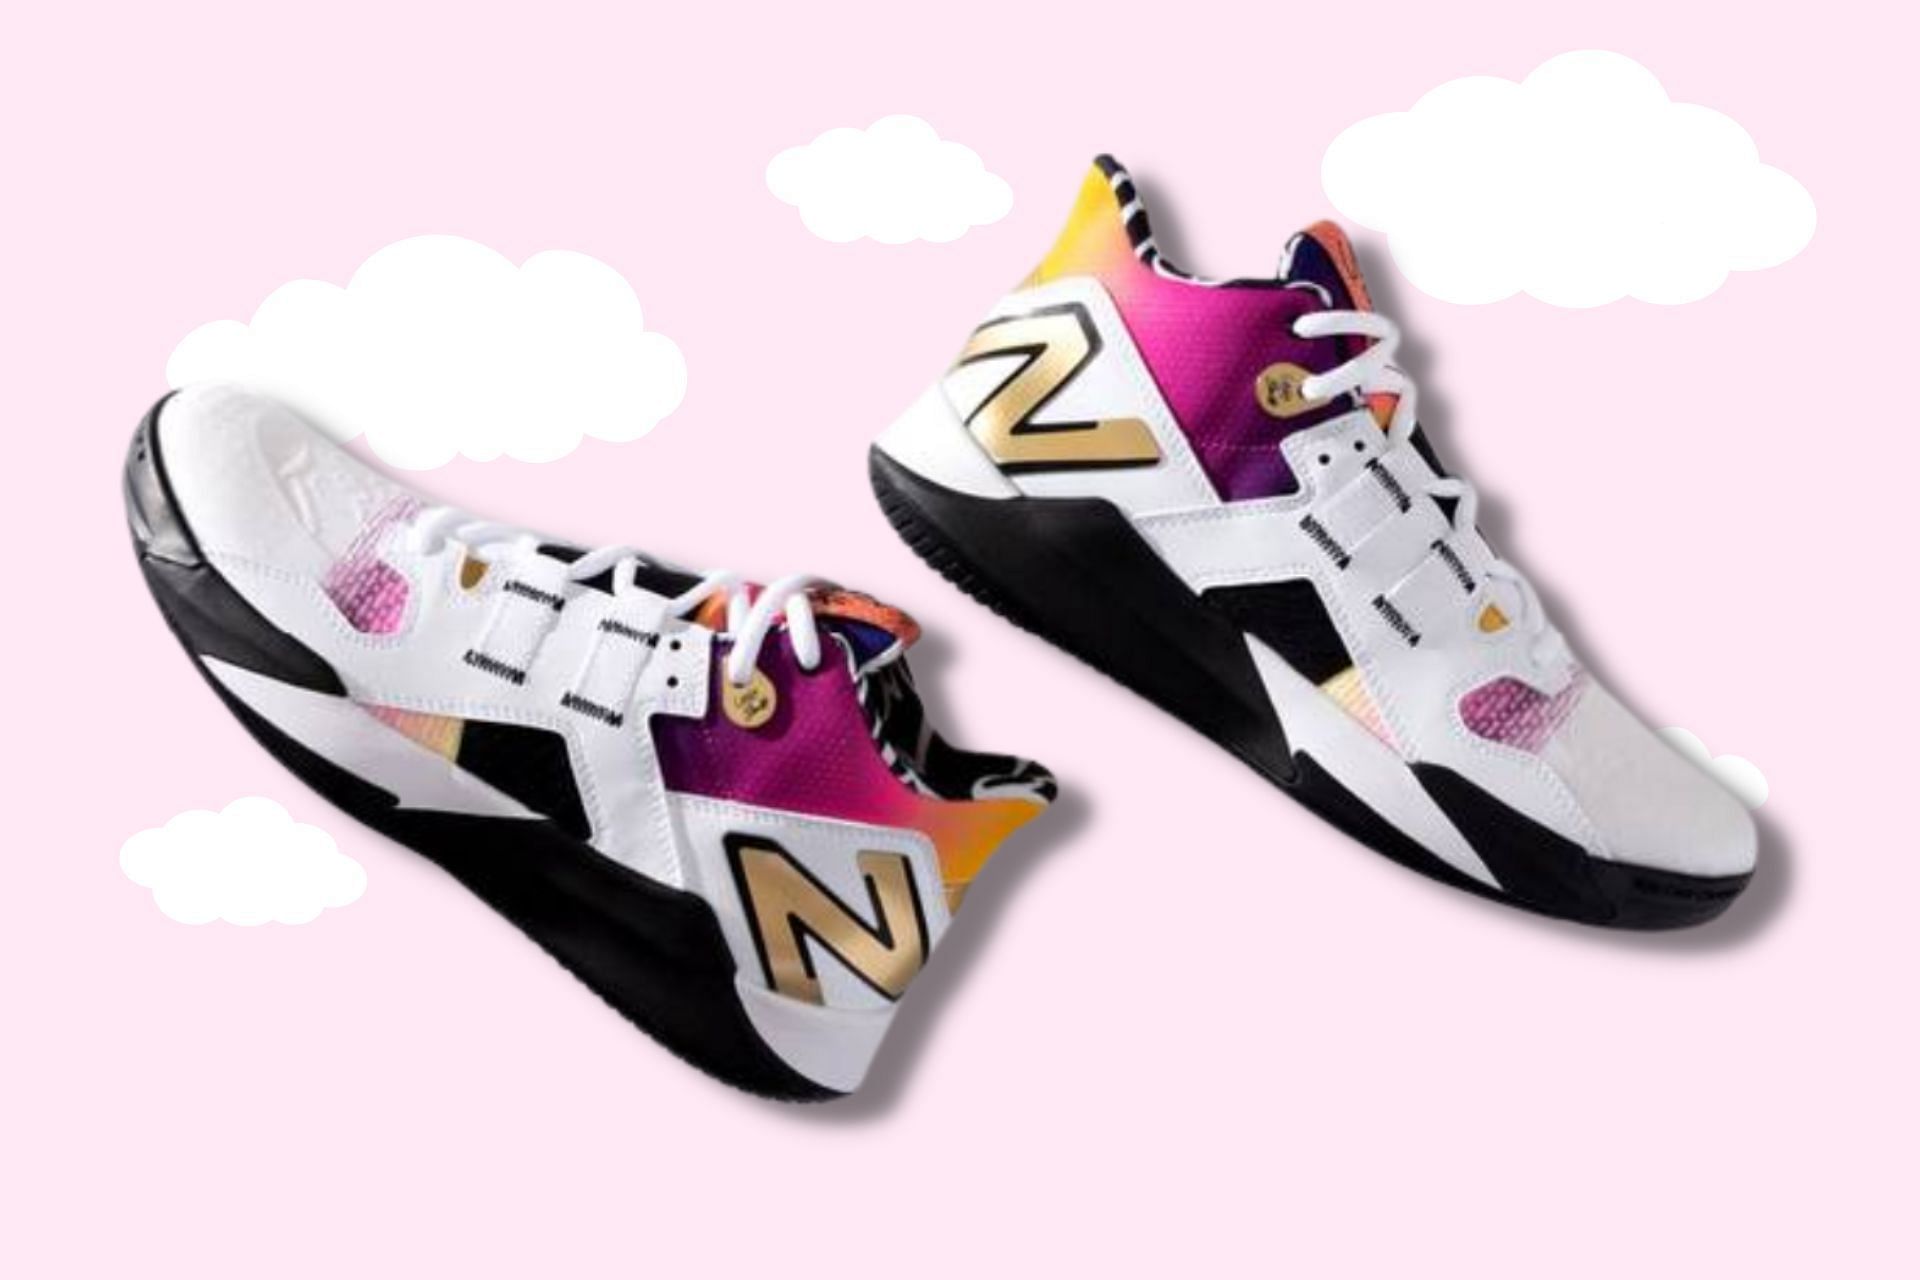 Coco Gauff x New Balance Coco CG1 sneakers (Image via NB)